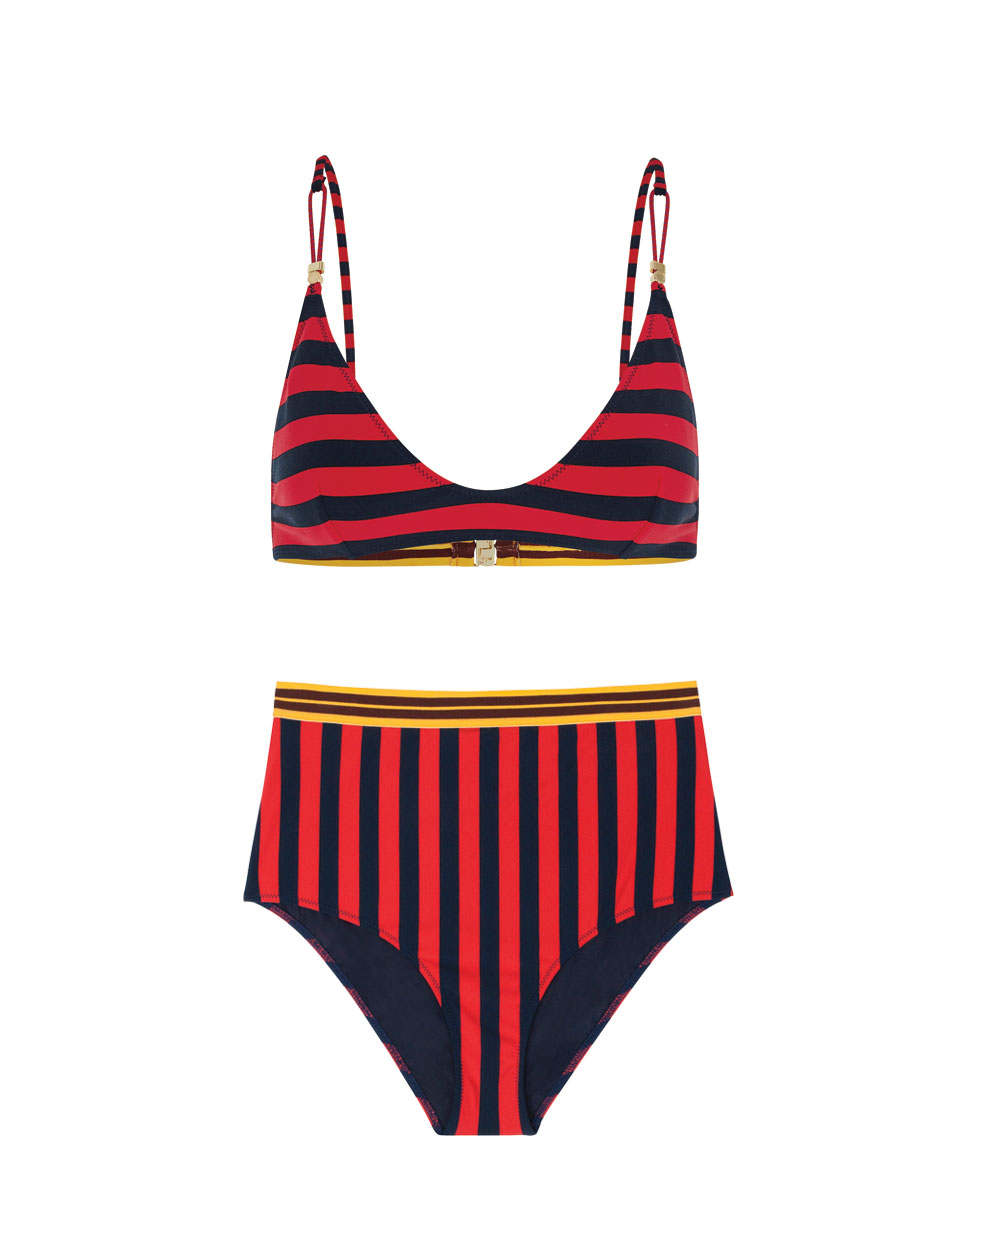 Stella McCartney bikini top, $179, and briefs, $179